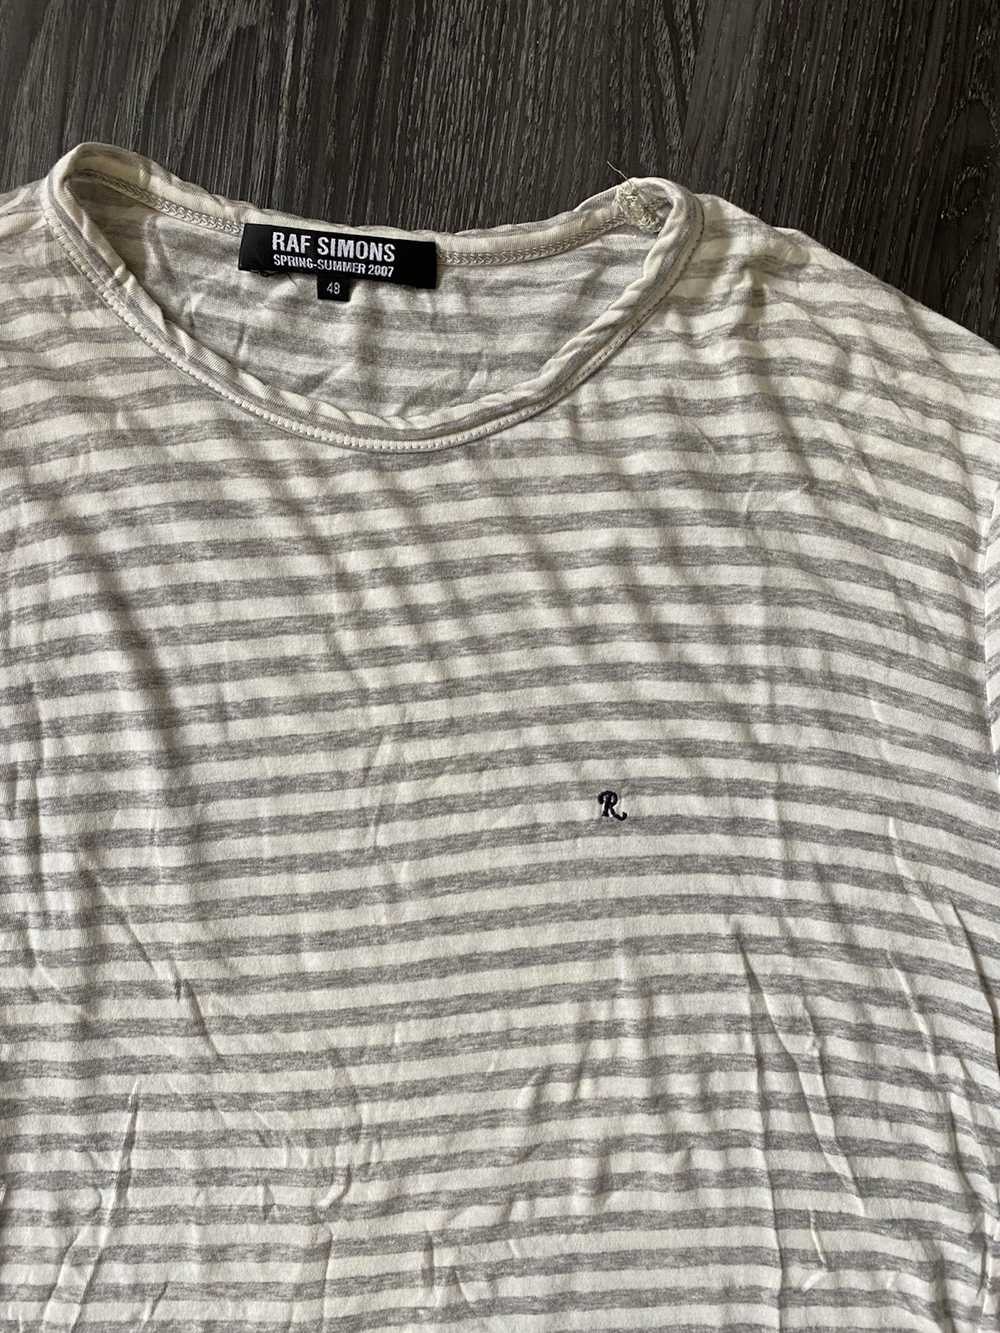 Raf Simons SS07 Striped R Shirt - image 2